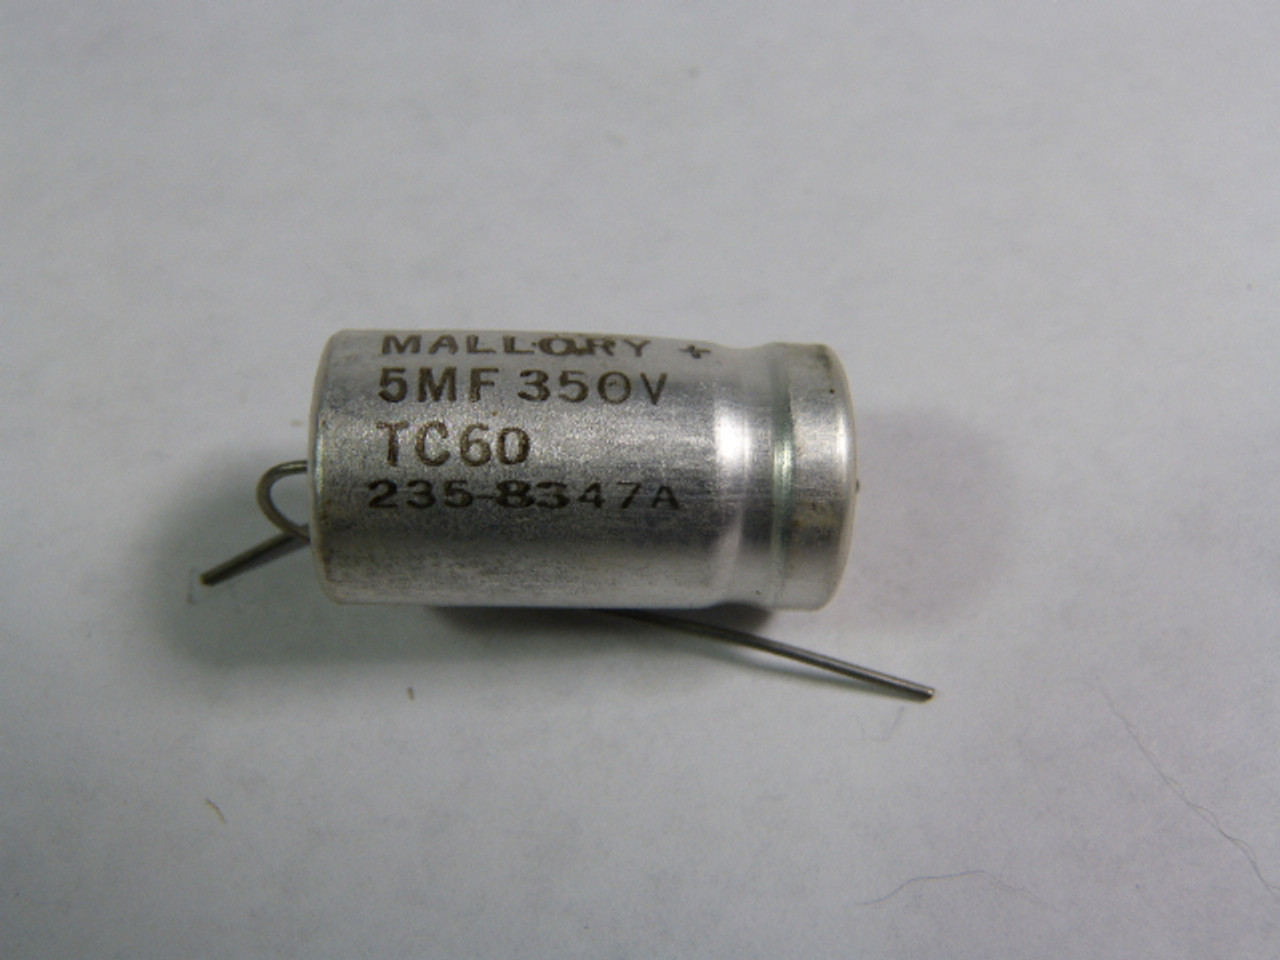 Mallory TC60/235-8347A Electrolytic Capacitor 5mf 350V USED